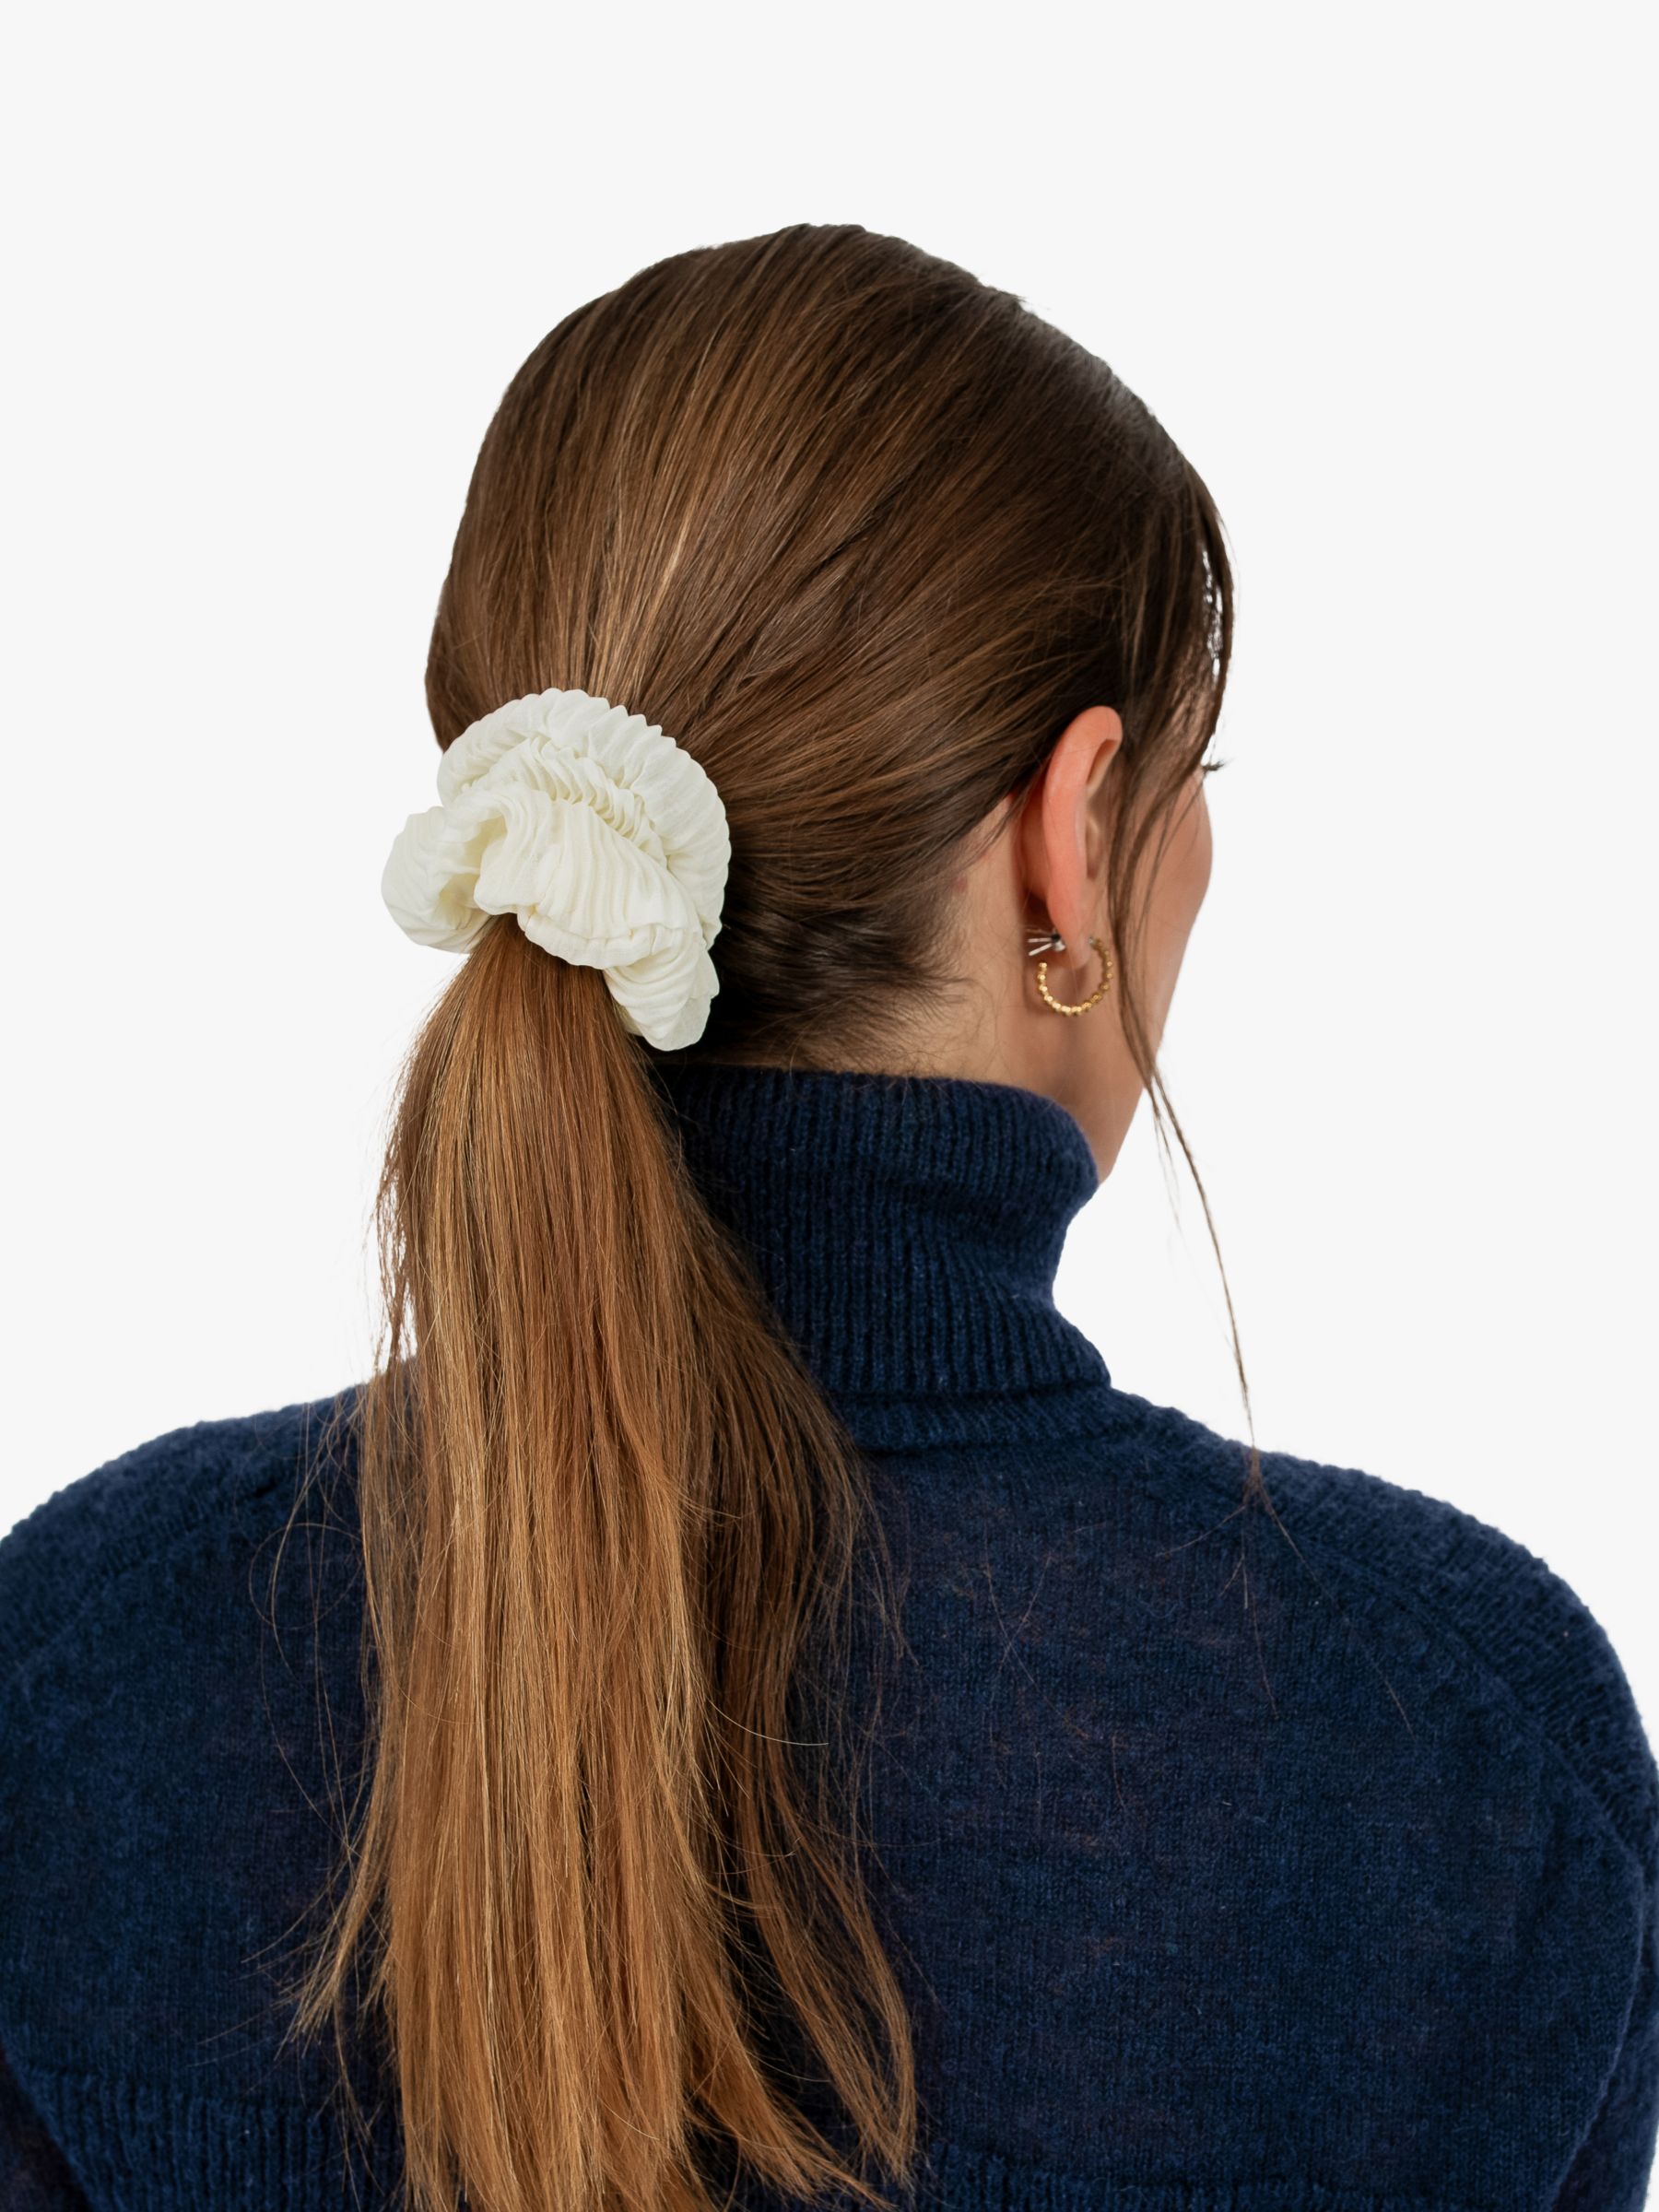 Bloom & Bay Lamorna Hair Scrunchies, Pack of 3, Multi, One Size